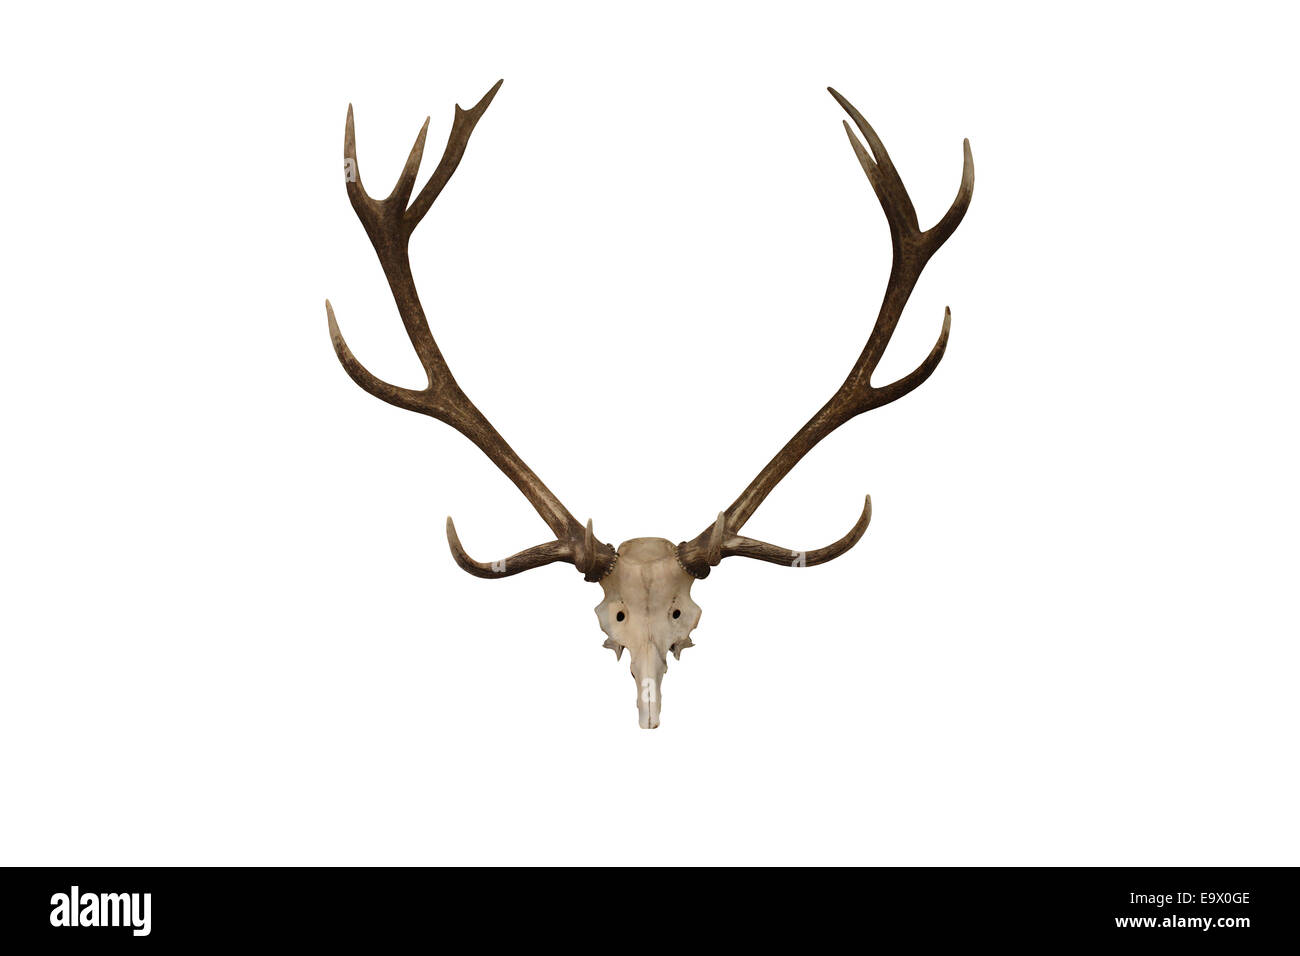 A Display Set of Mounted Deer Antlers. Stock Photo